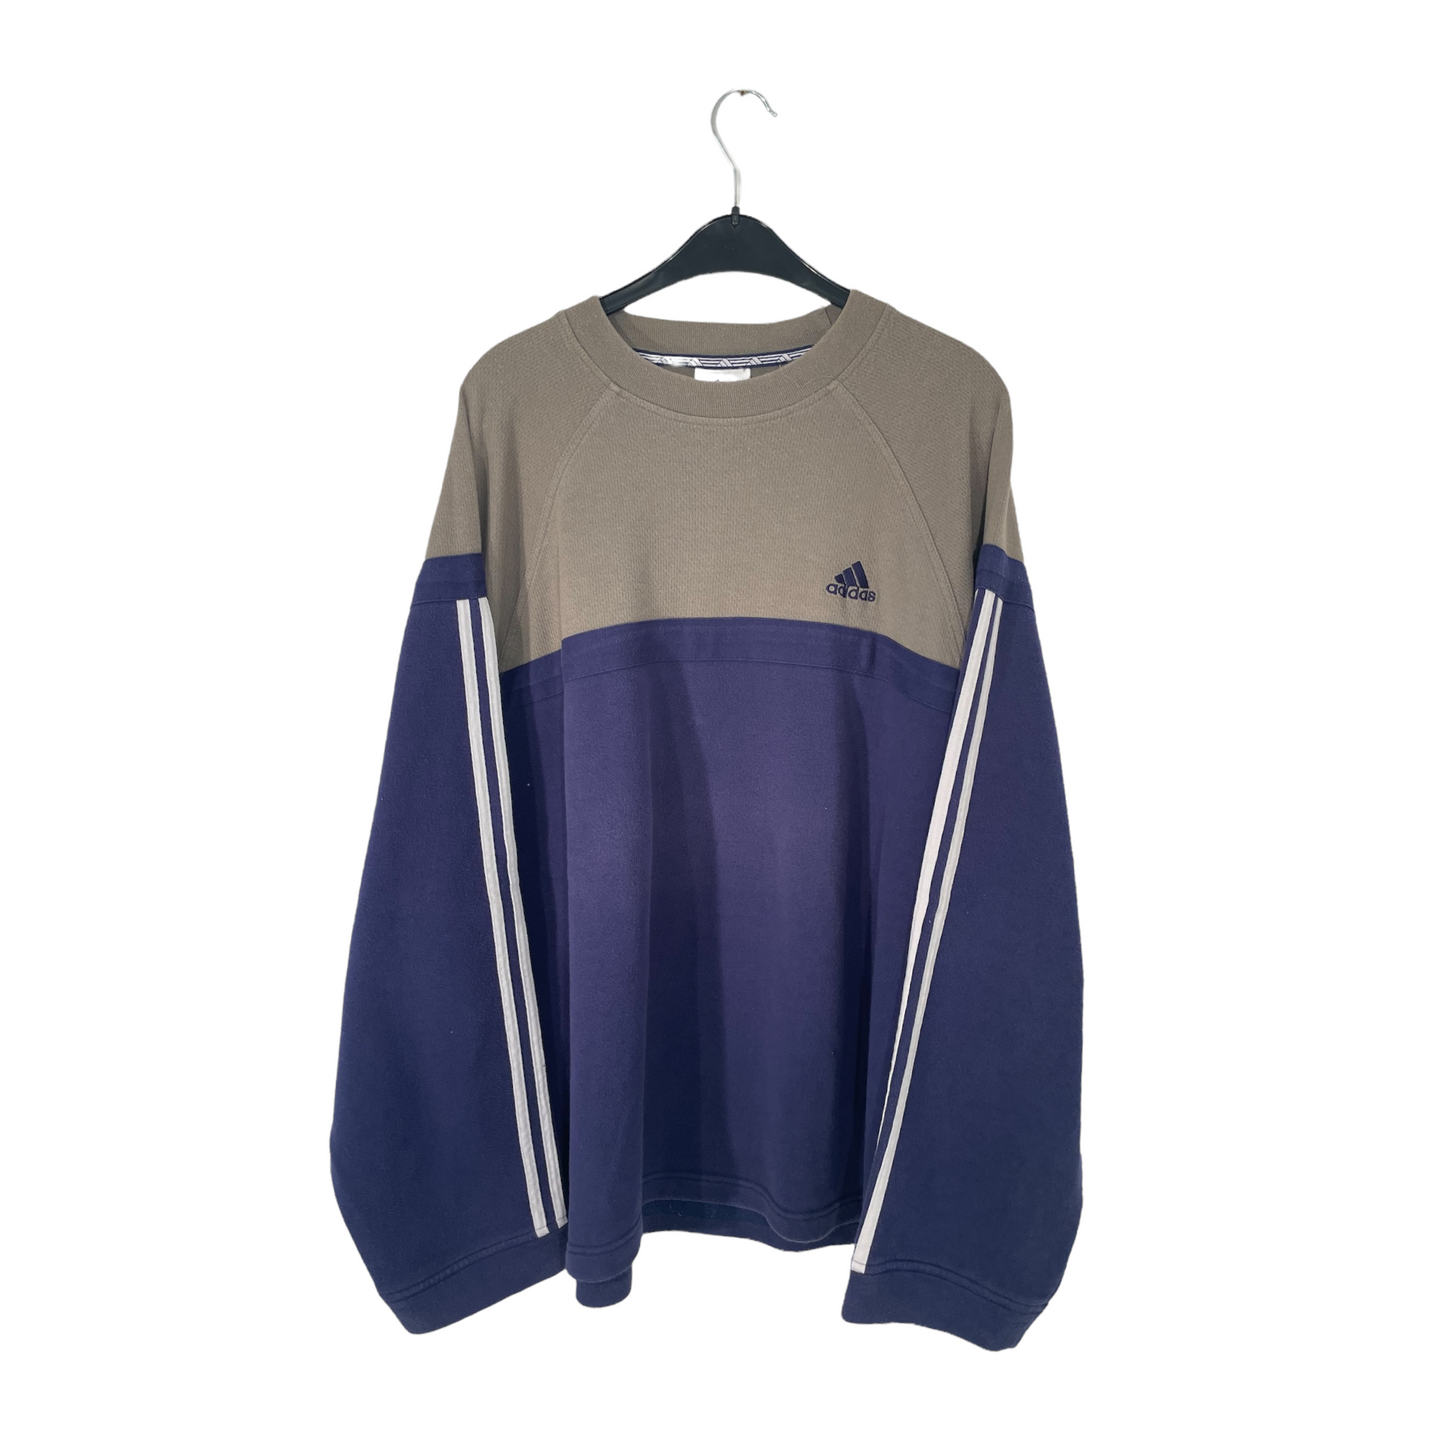 Adidas Colorblock Sweatshirt